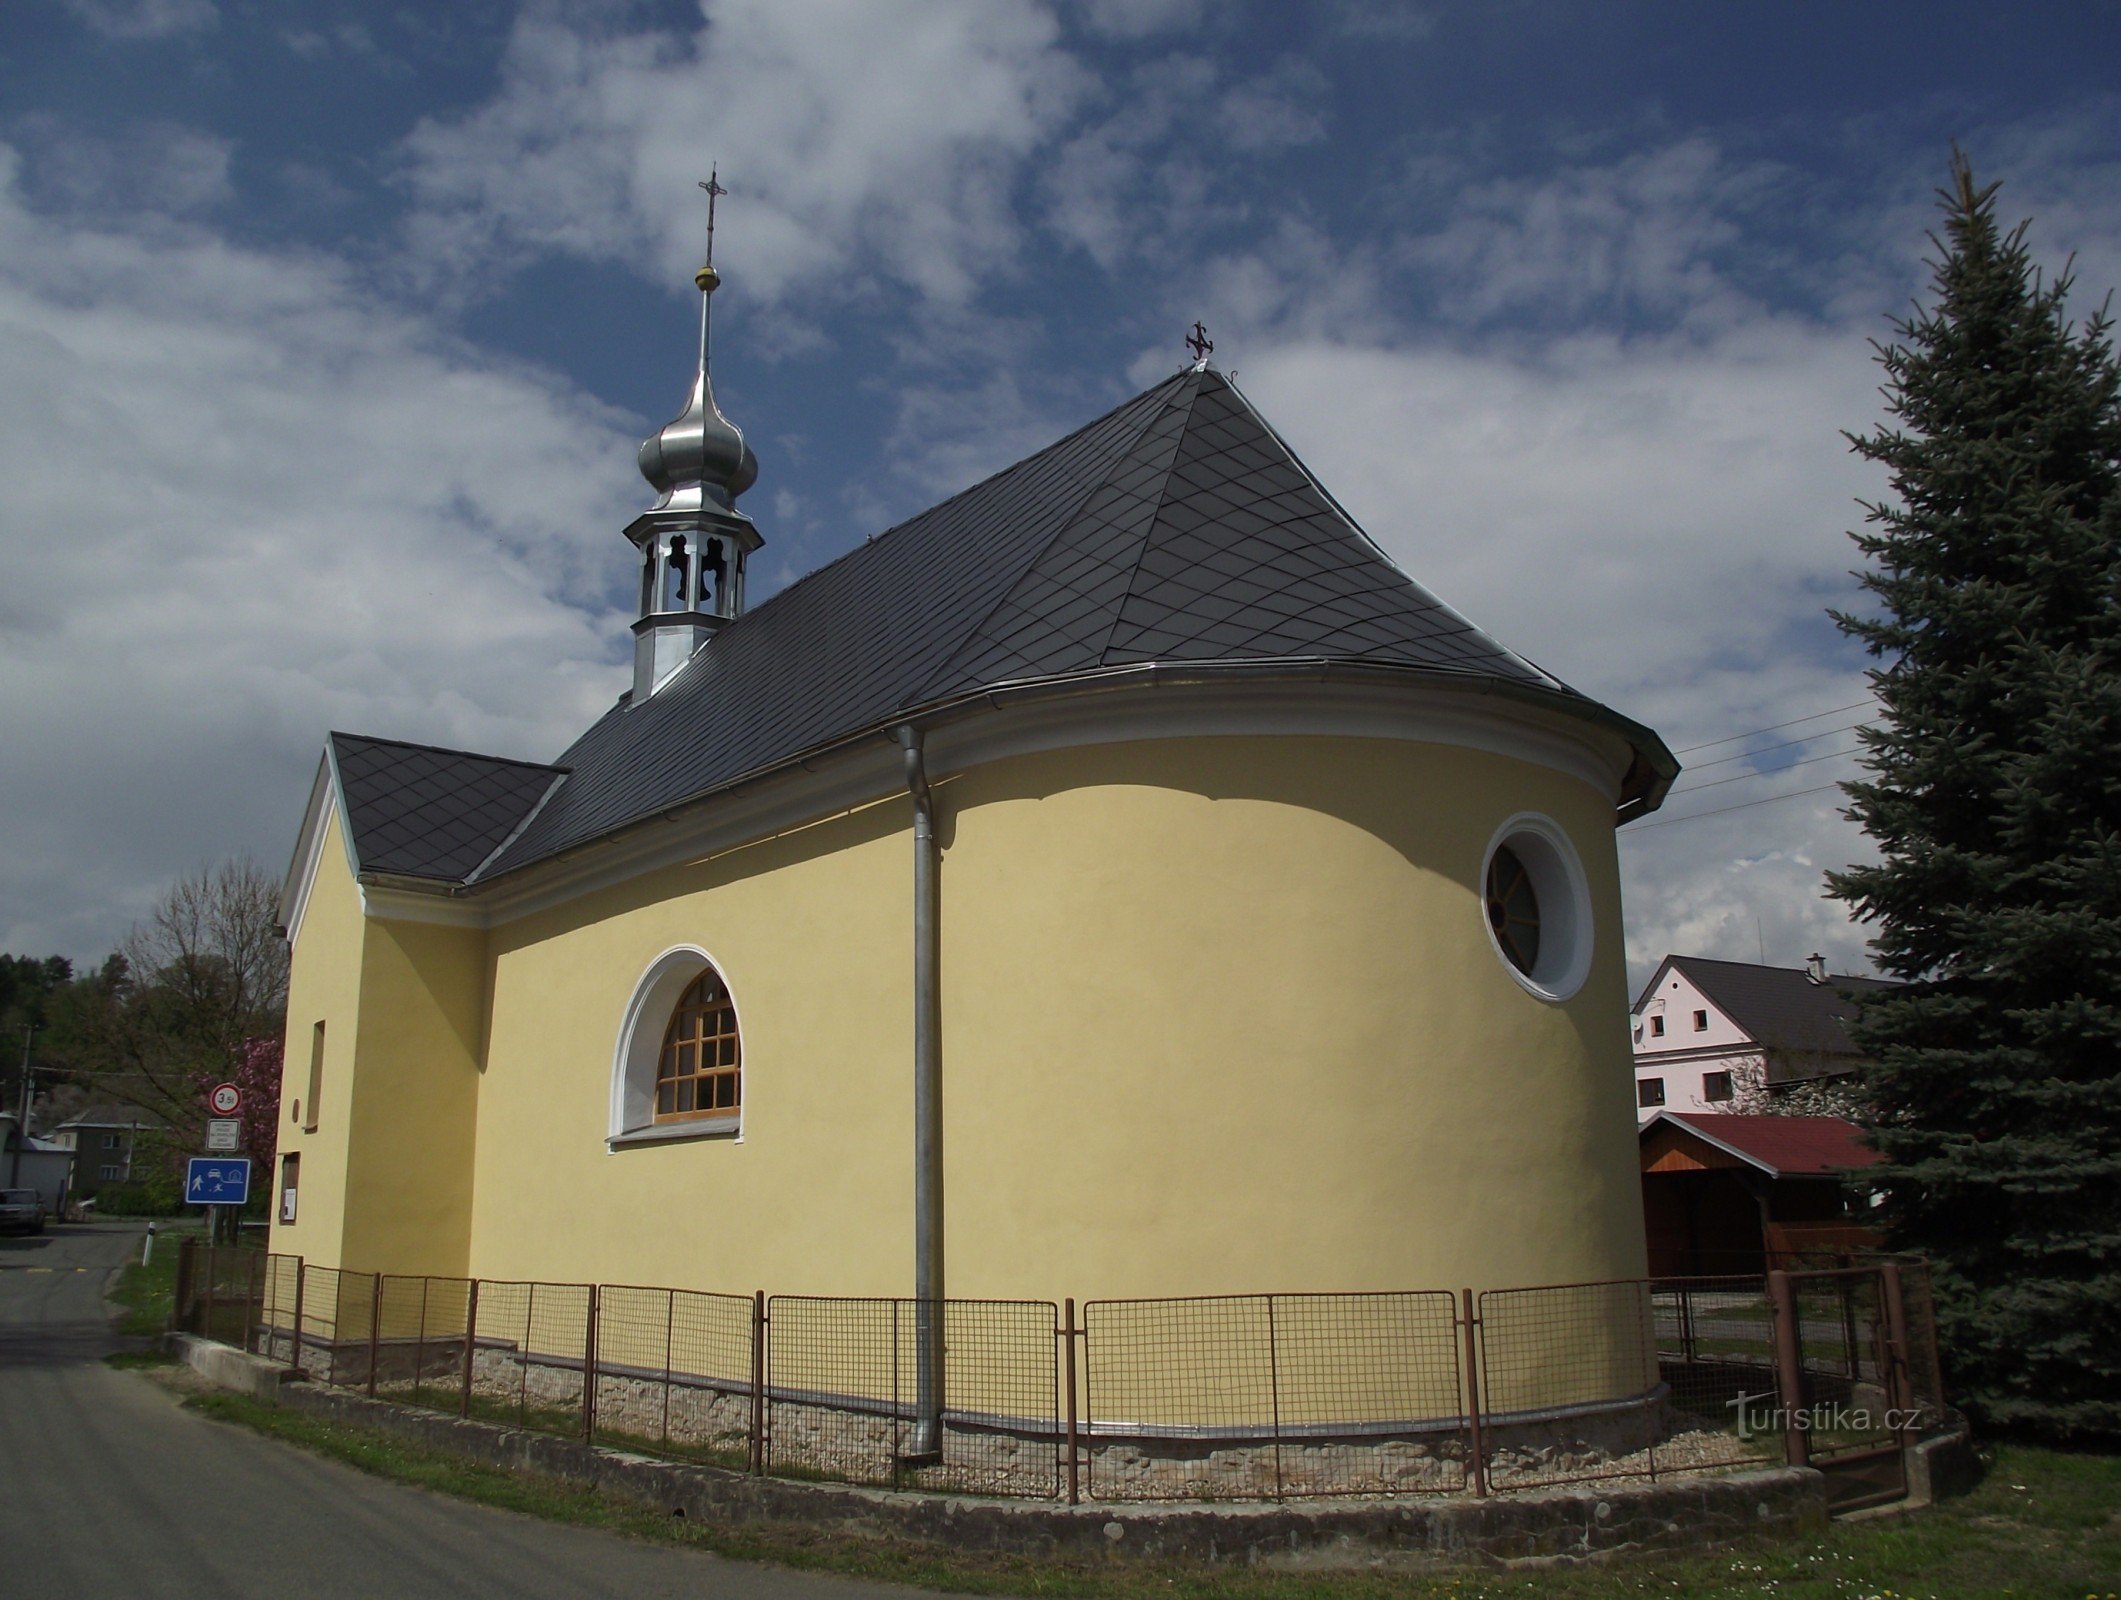 Vyšehoří - nhà nguyện của St. Jan Nepomucký